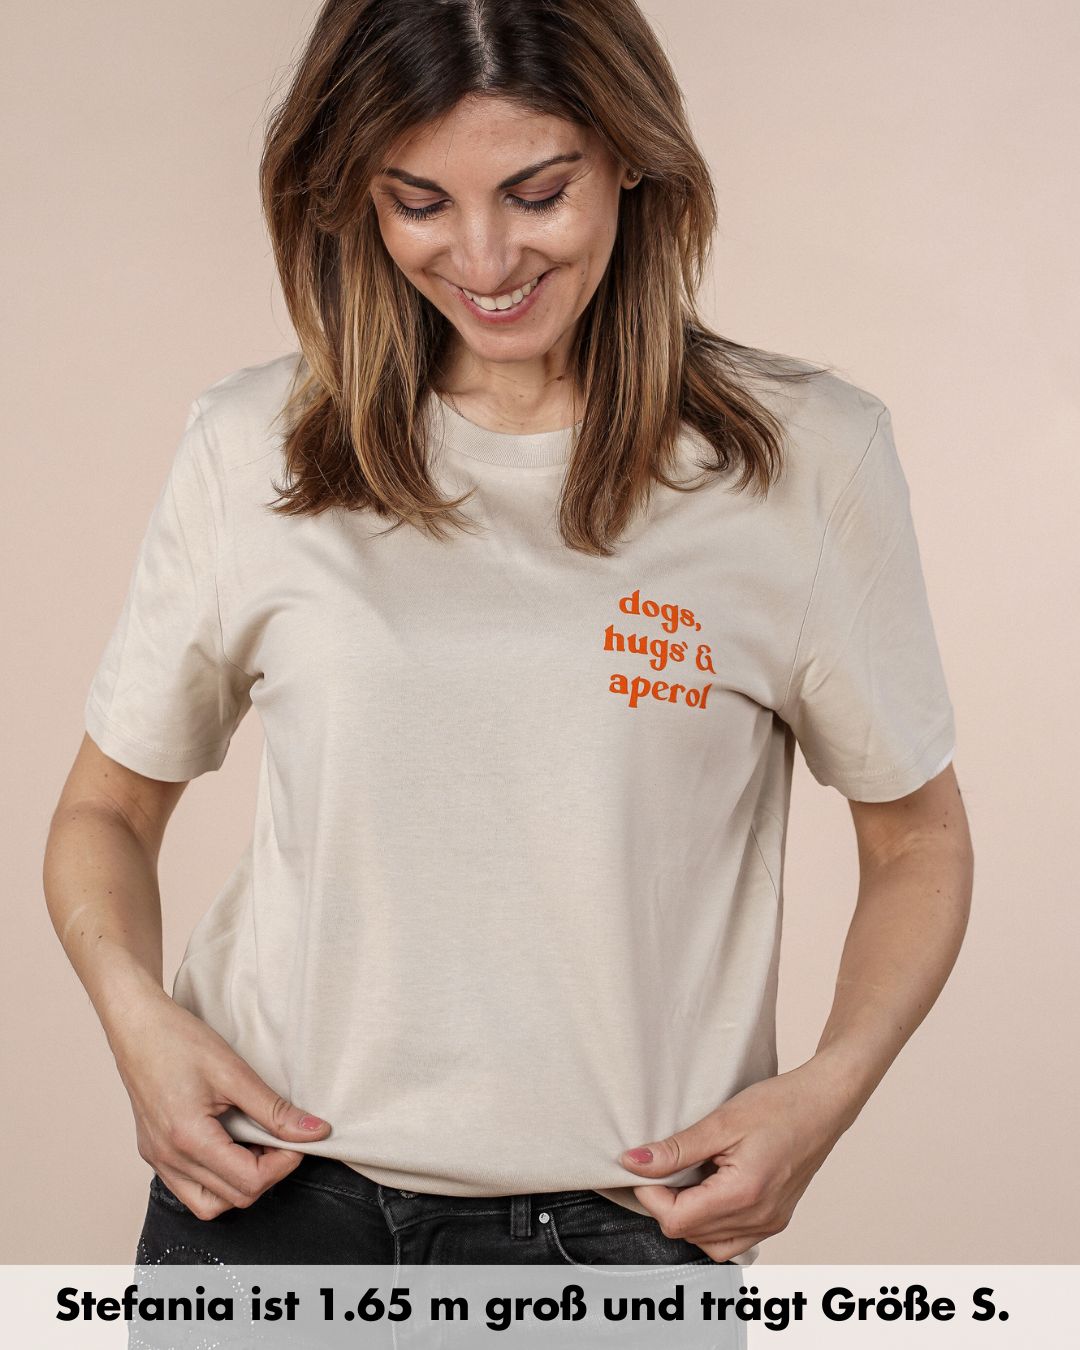 Organic Frauen-Shirt 'dogs, hugs & aperol'